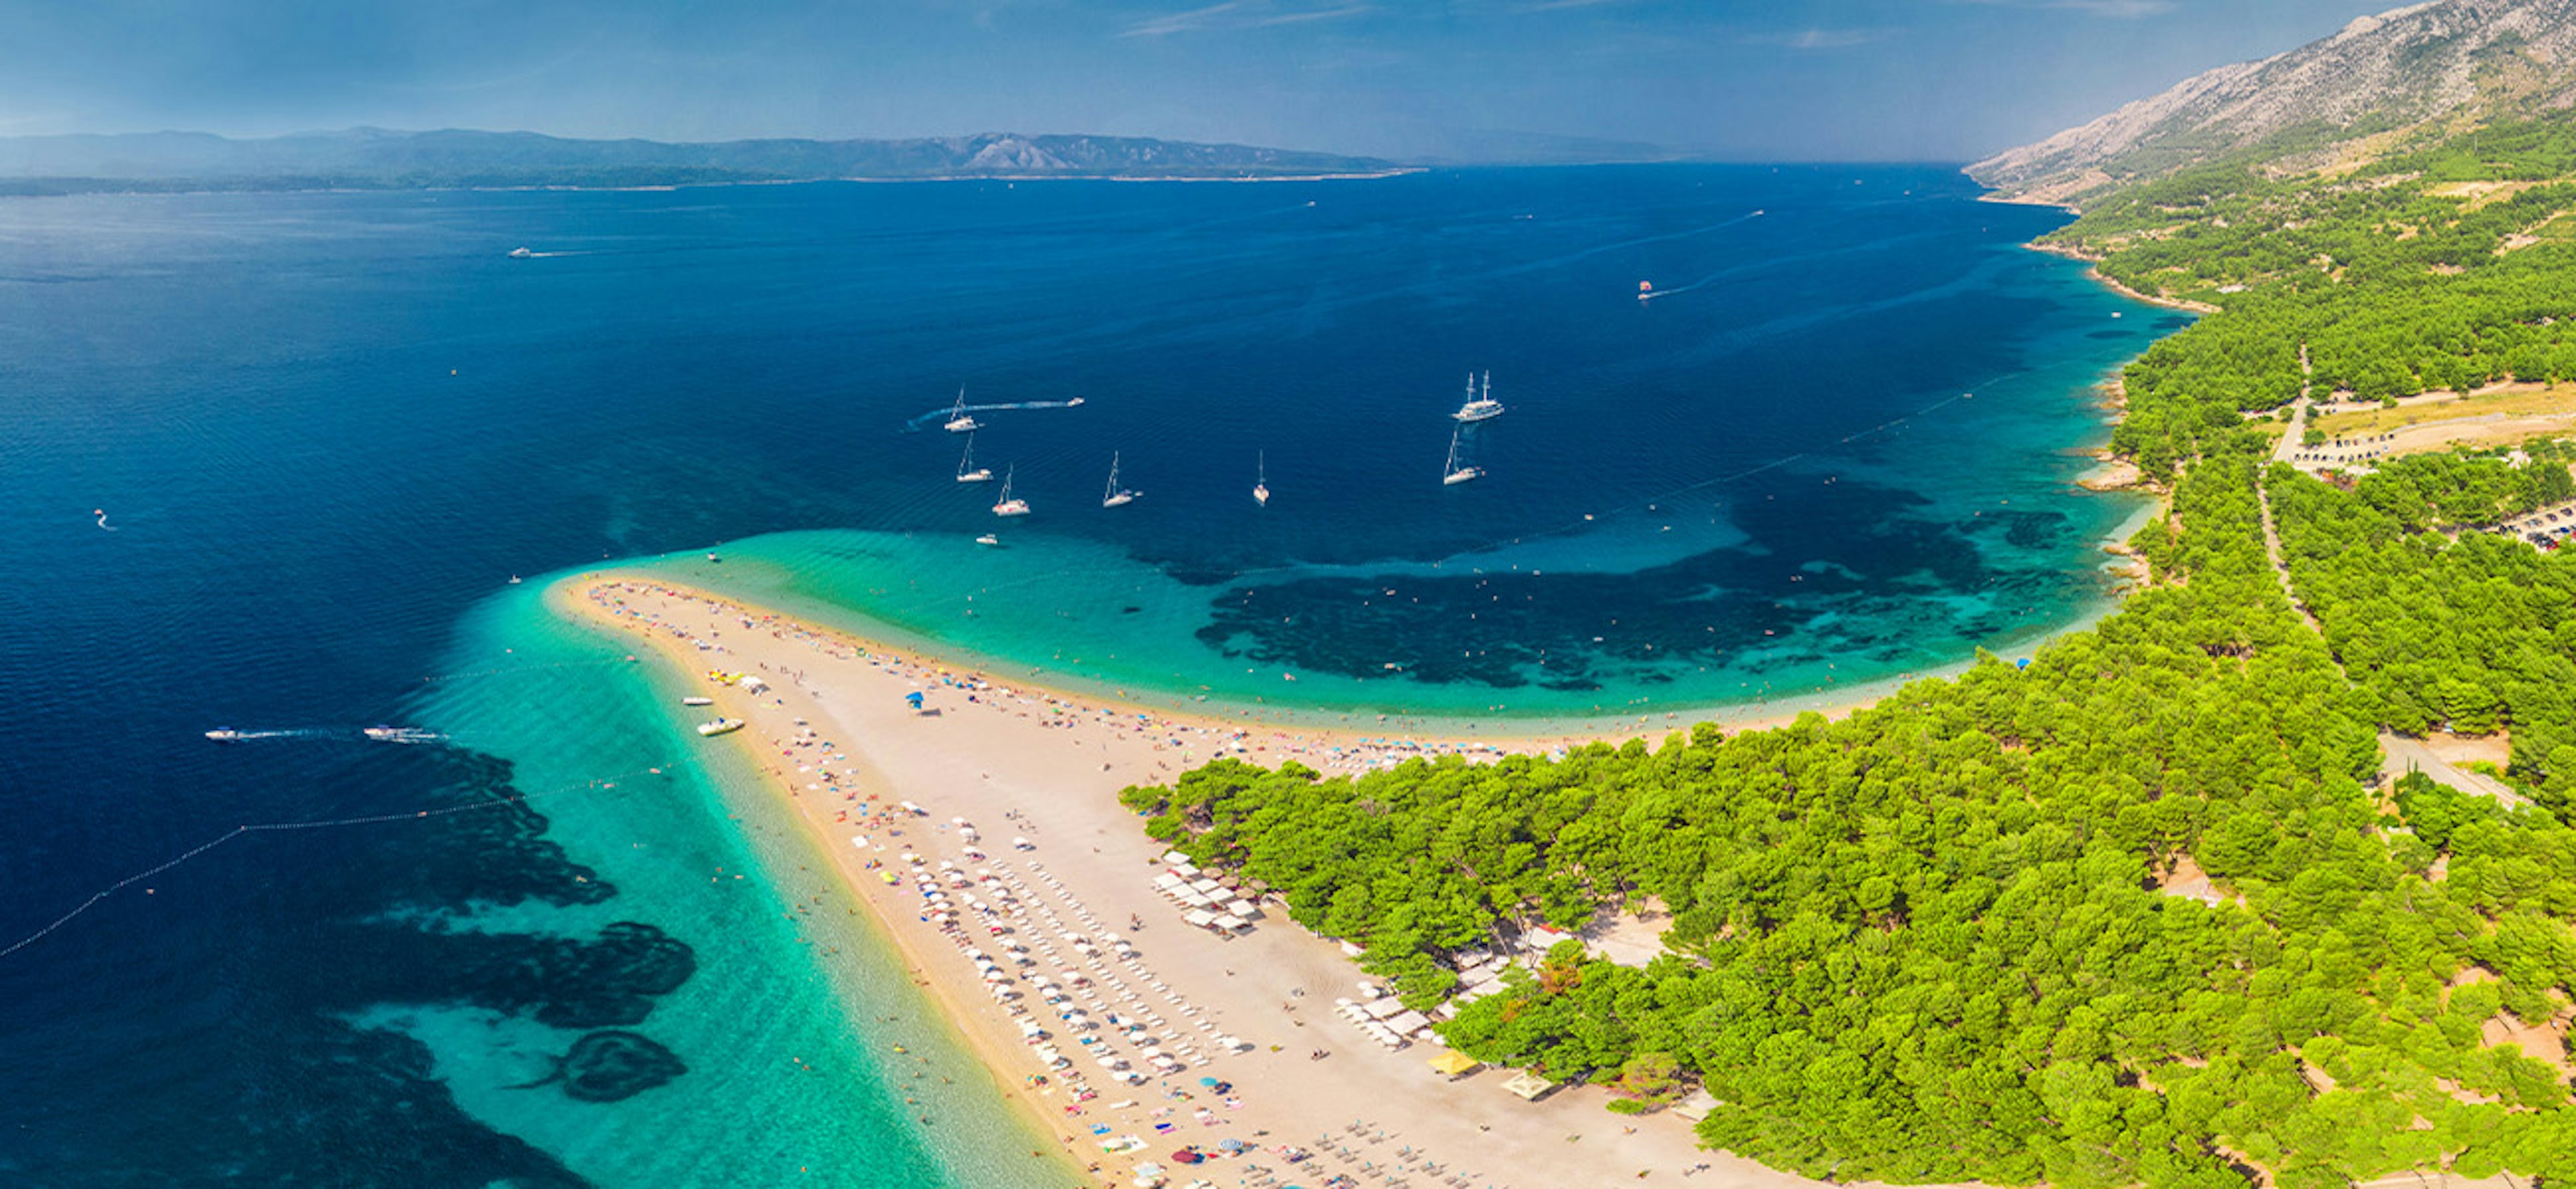 Aerial view of the famous Zlatni Rat beach in Bol, on the island Brac off the coast of Croatia